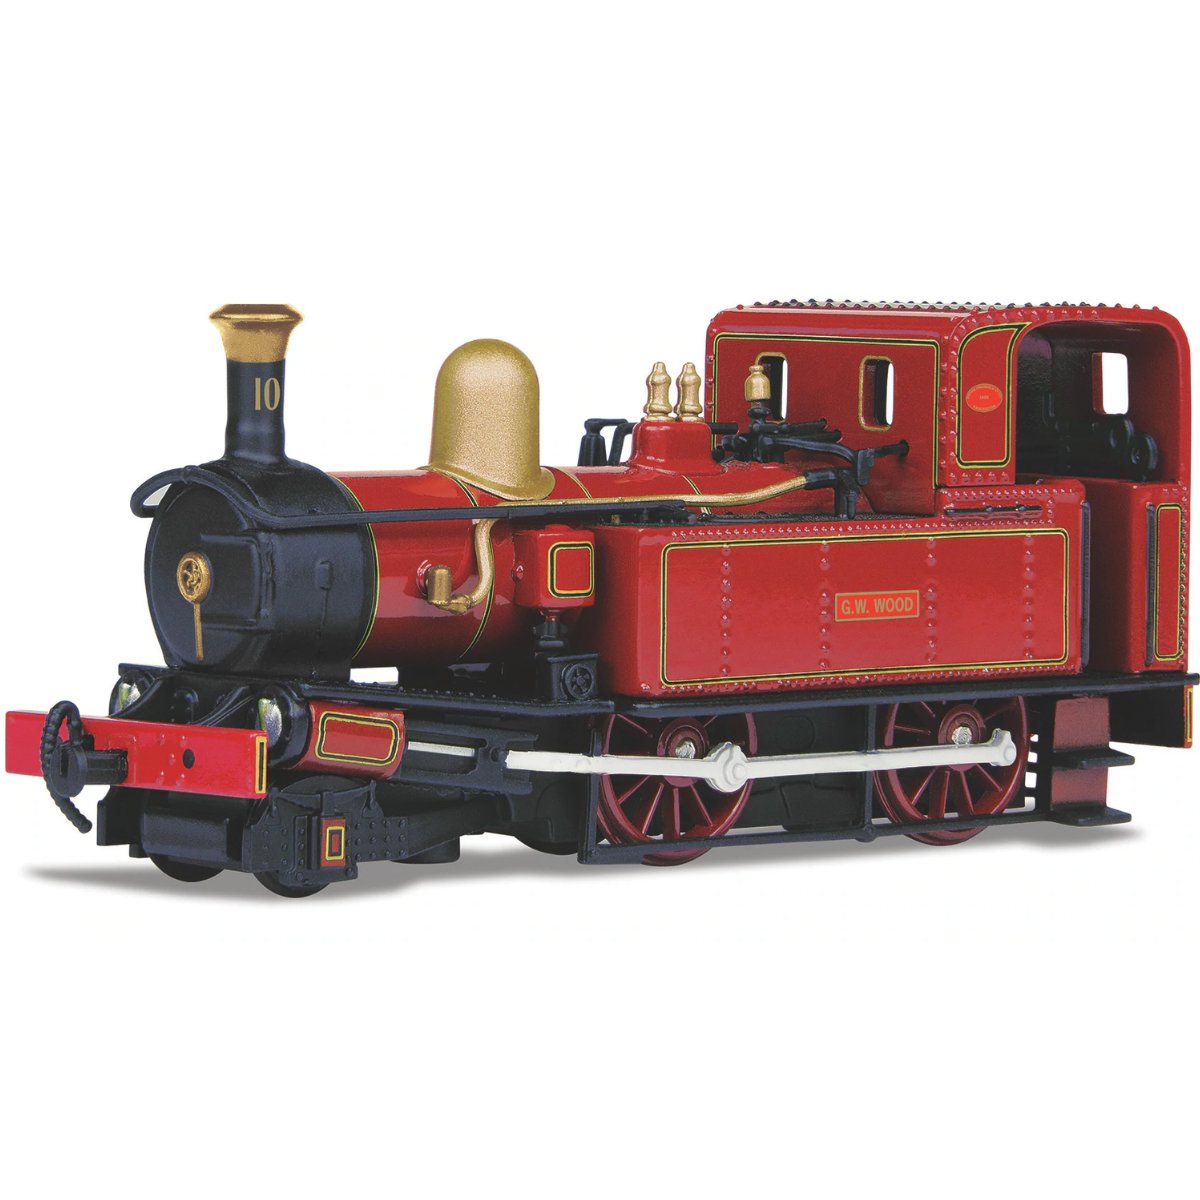 Oxford Rail IOM Railways No.10 G H Wood Indian Red - Static Model - Phillips Hobbies